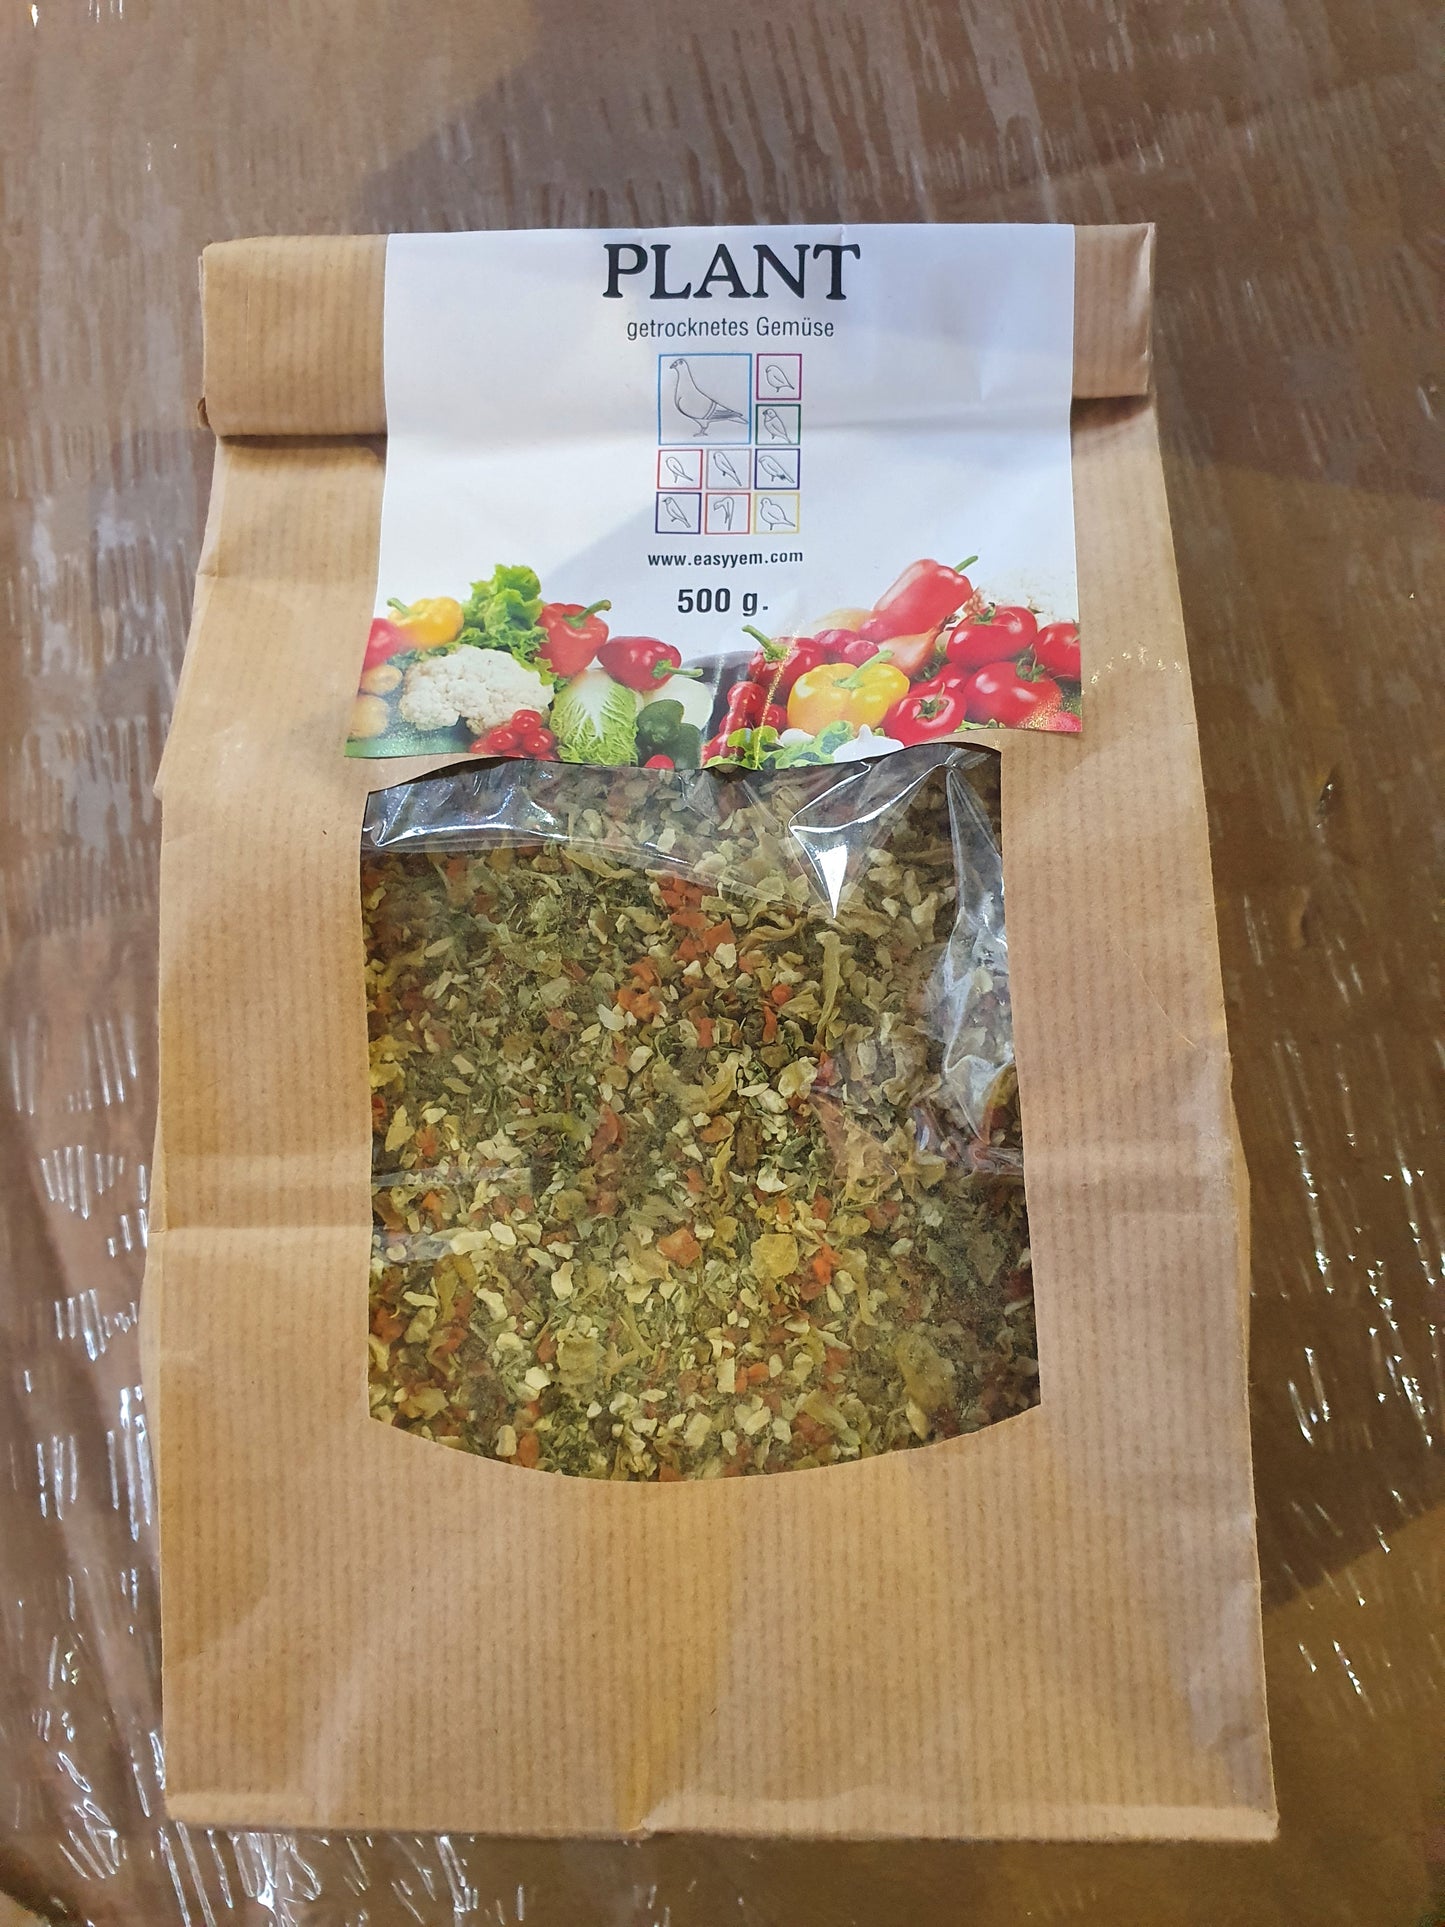 Plant - 500 gram (Voedingssupplement op basis van gedroogde groenten)